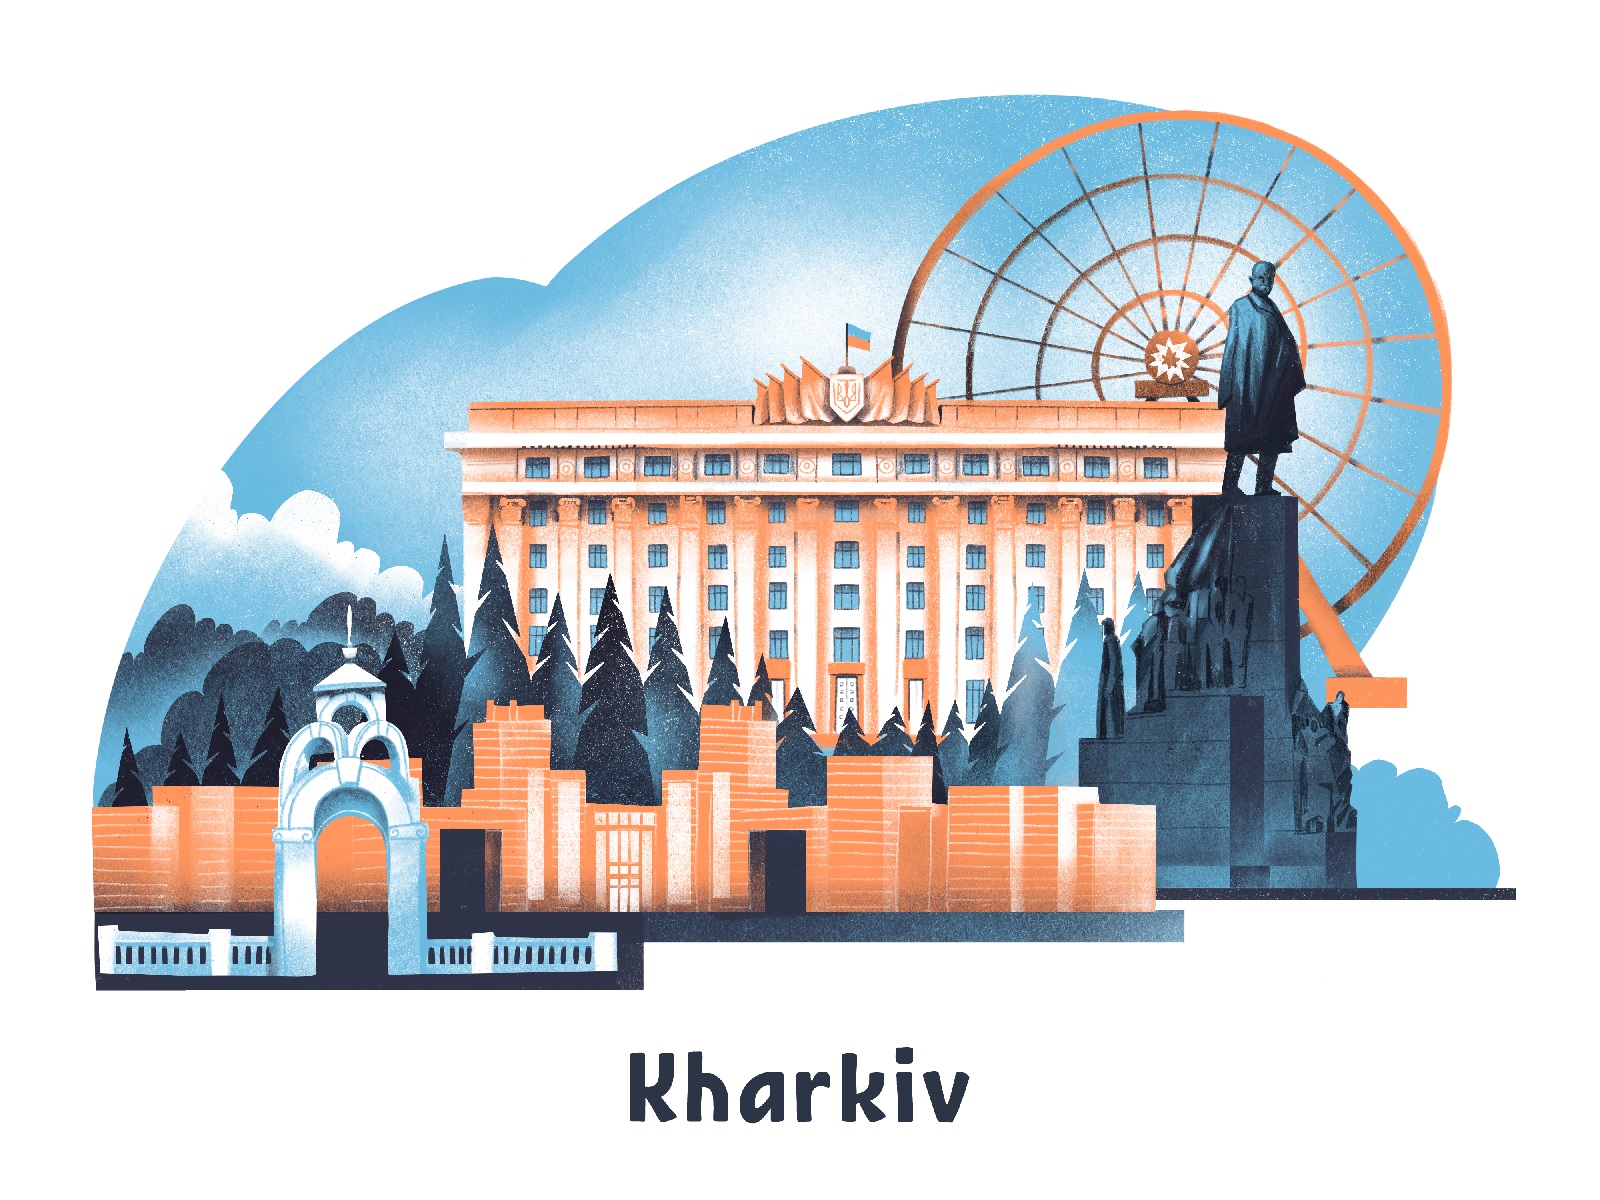 Ukrainian cities Kharkiv tubikarts illustration